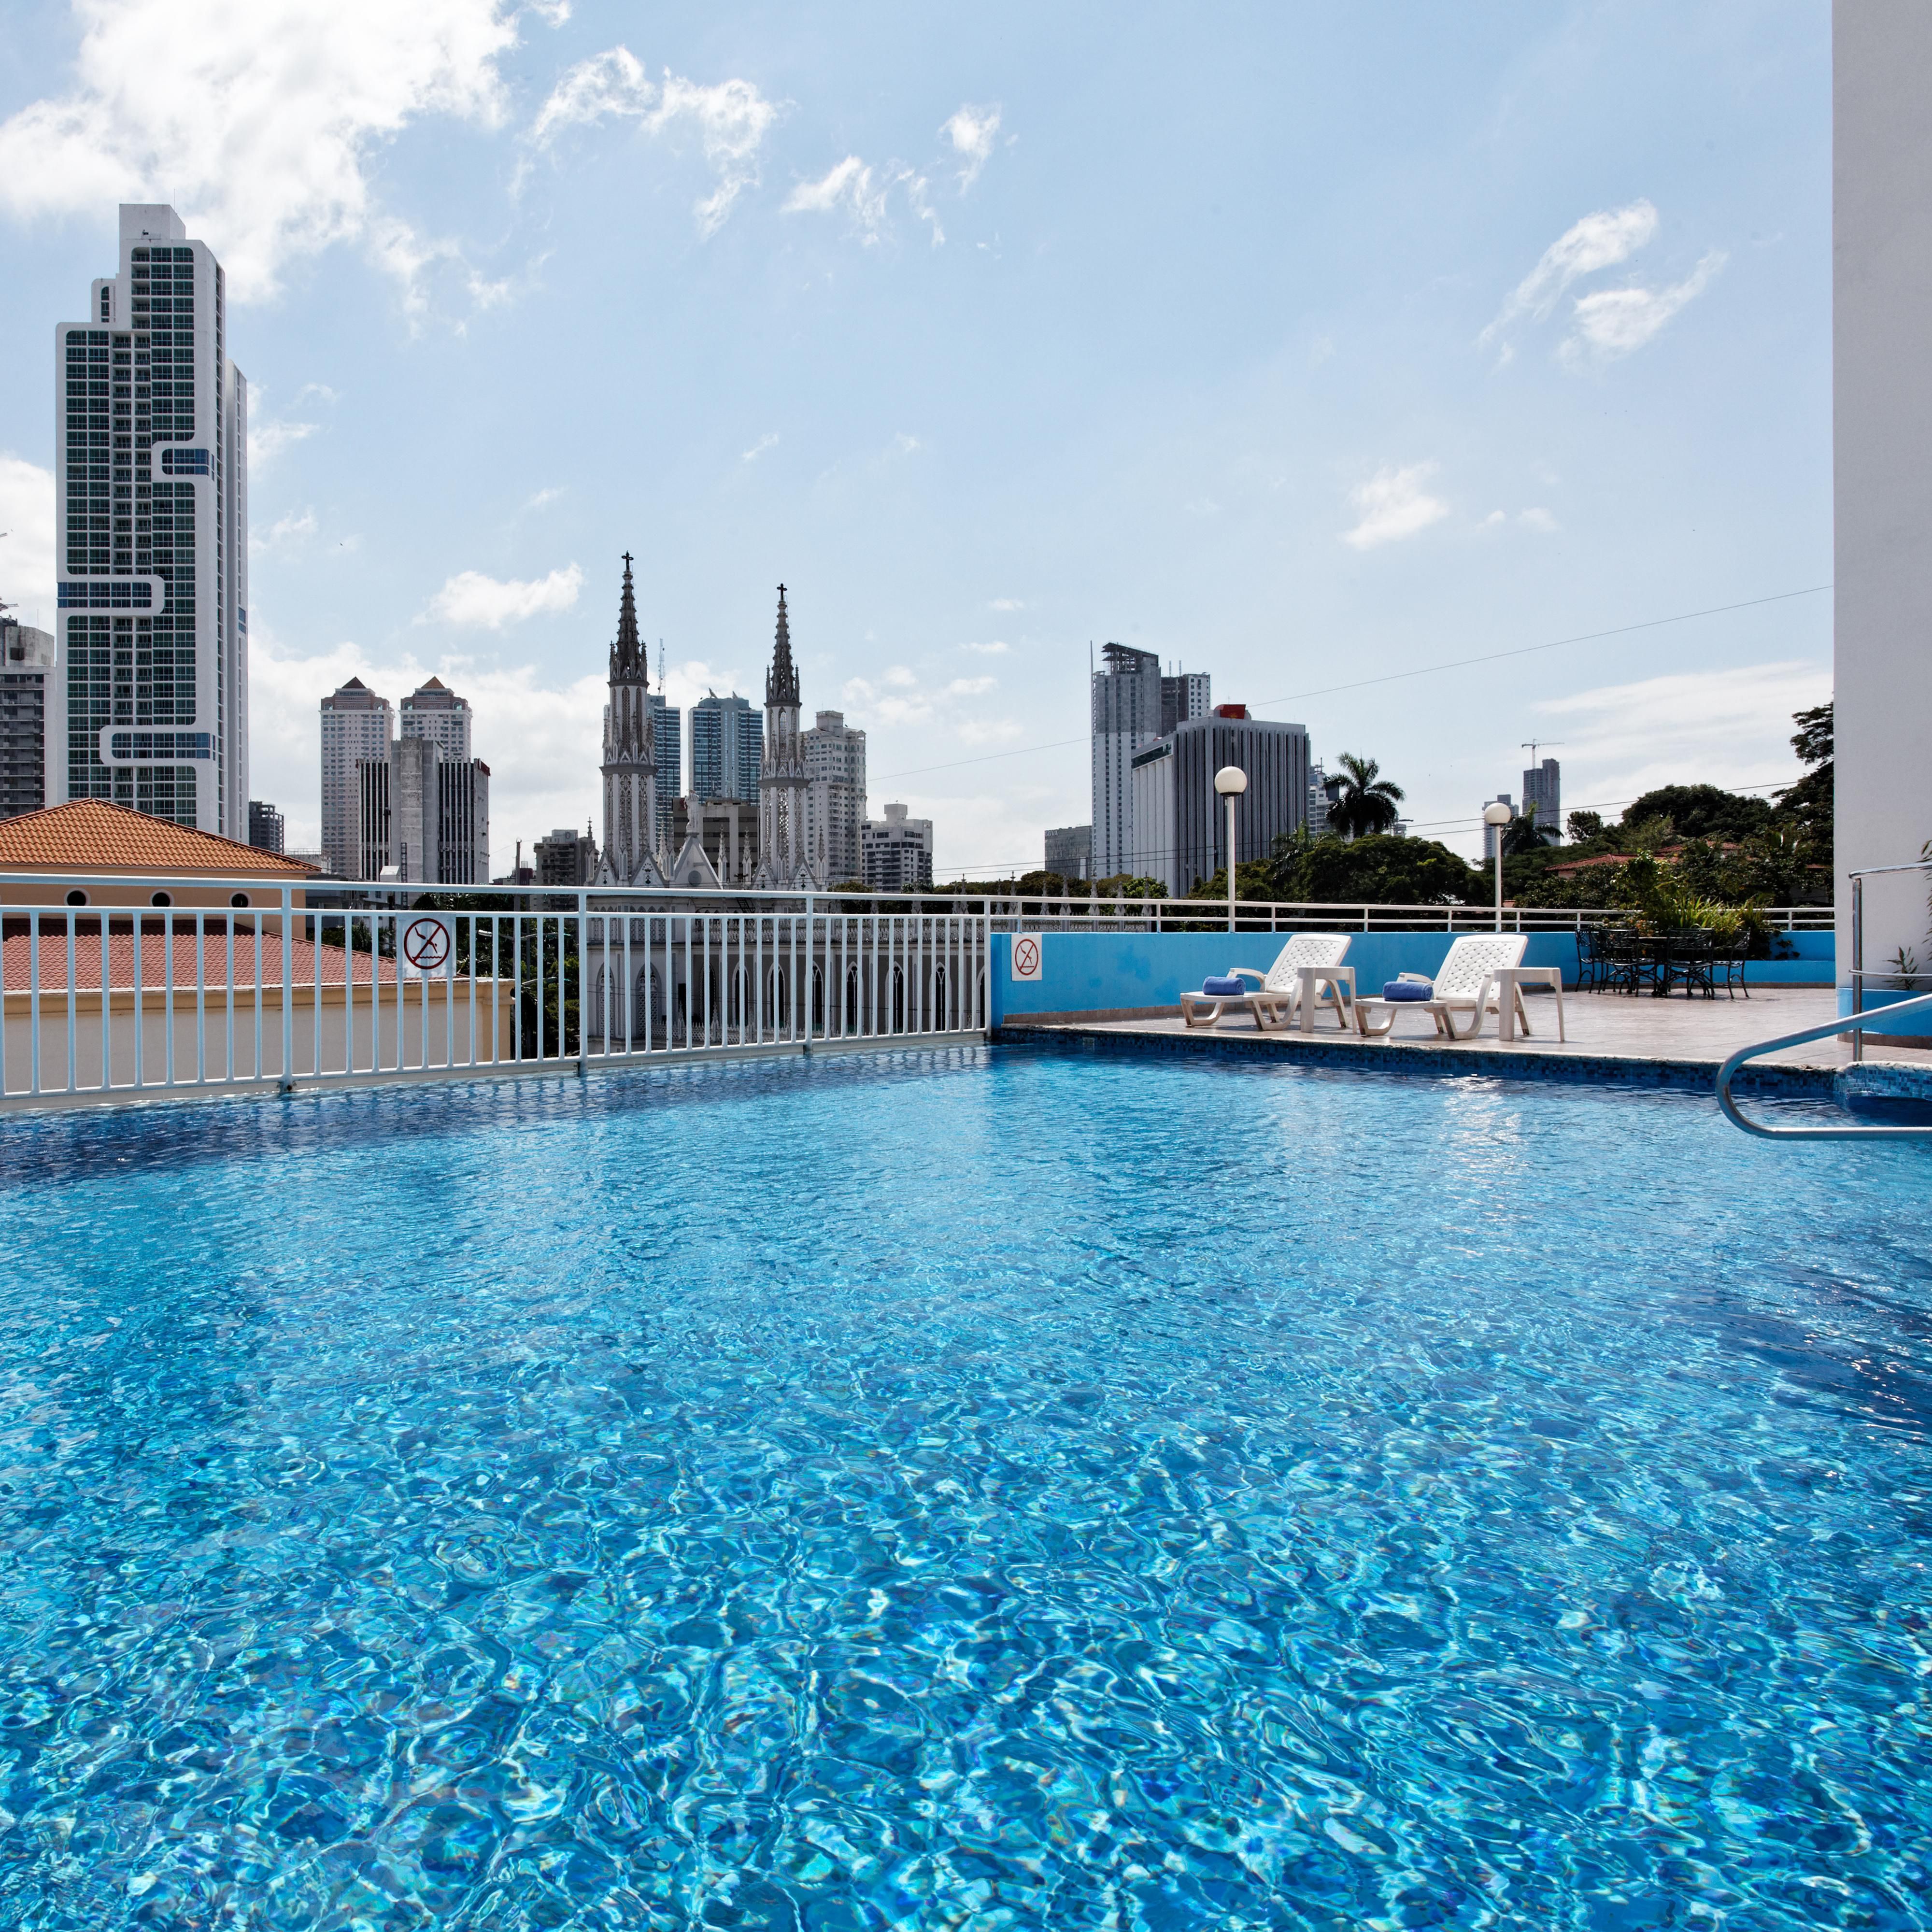 Swimming Pool at the Crowne Plaza Panama Hotel